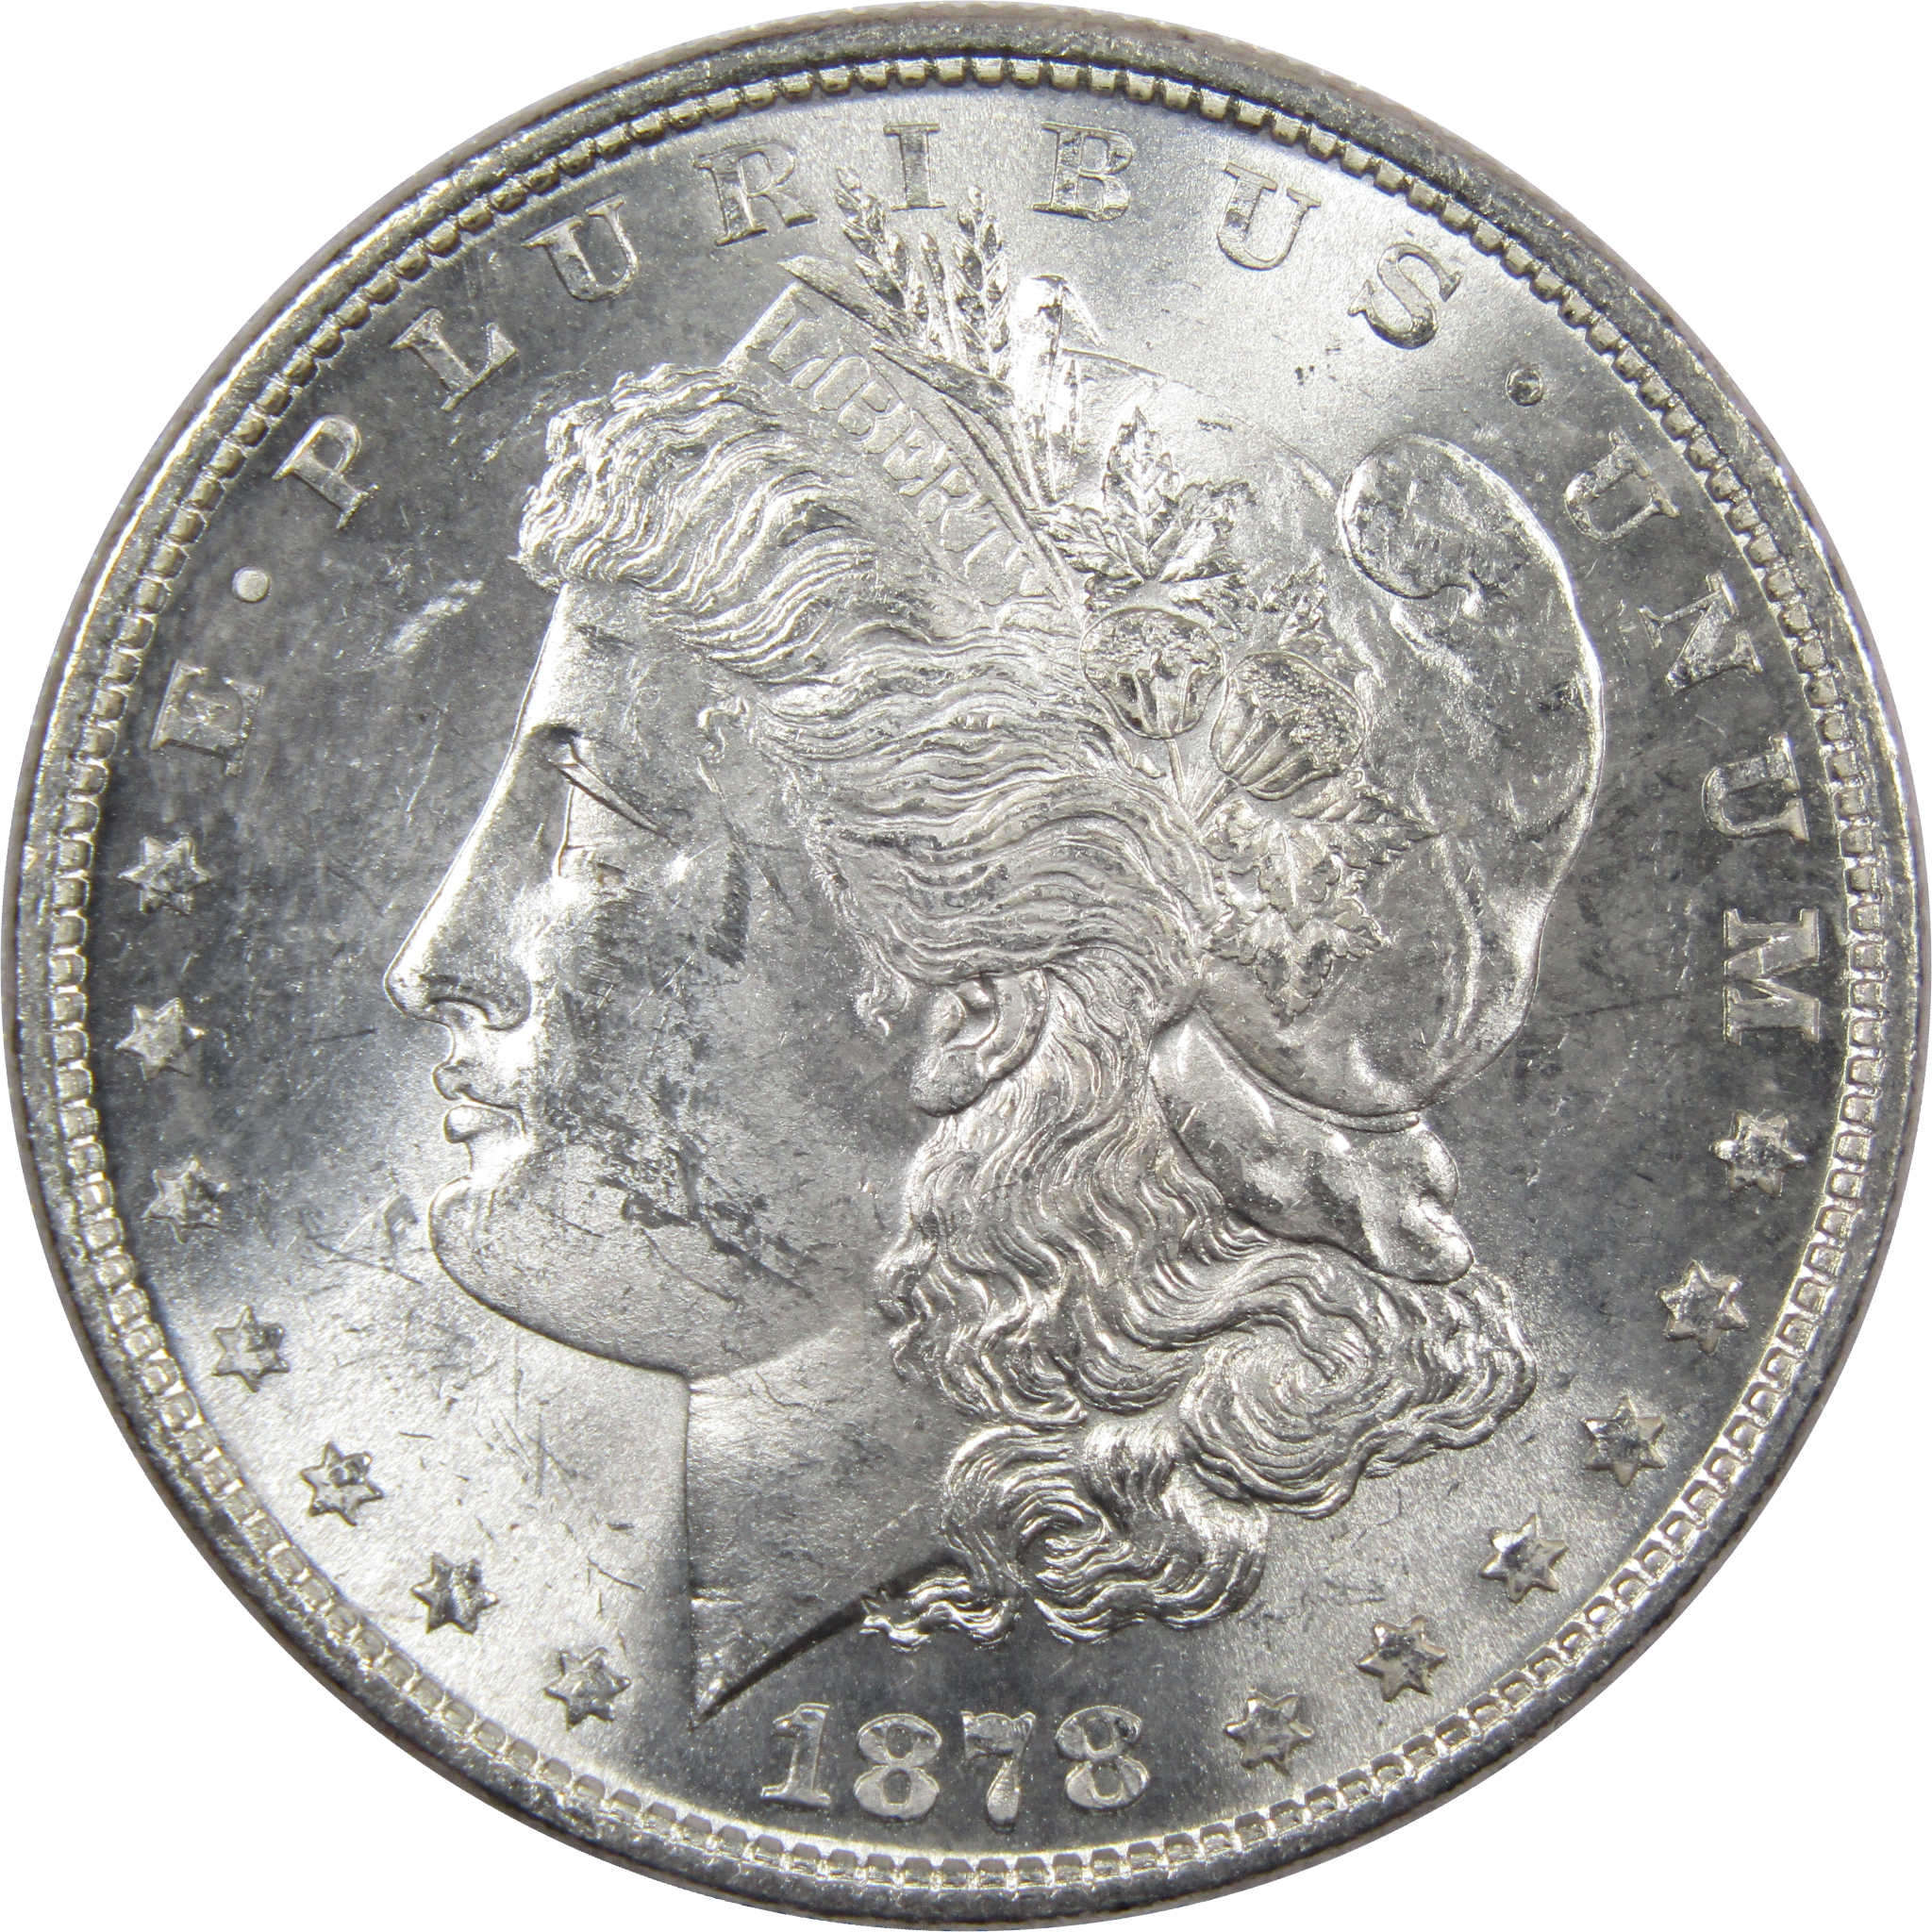 1878 7TF Rev 79 Morgan Dollar Uncirculated Mint State Silver SKU:I2201 - Morgan coin - Morgan silver dollar - Morgan silver dollar for sale - Profile Coins &amp; Collectibles